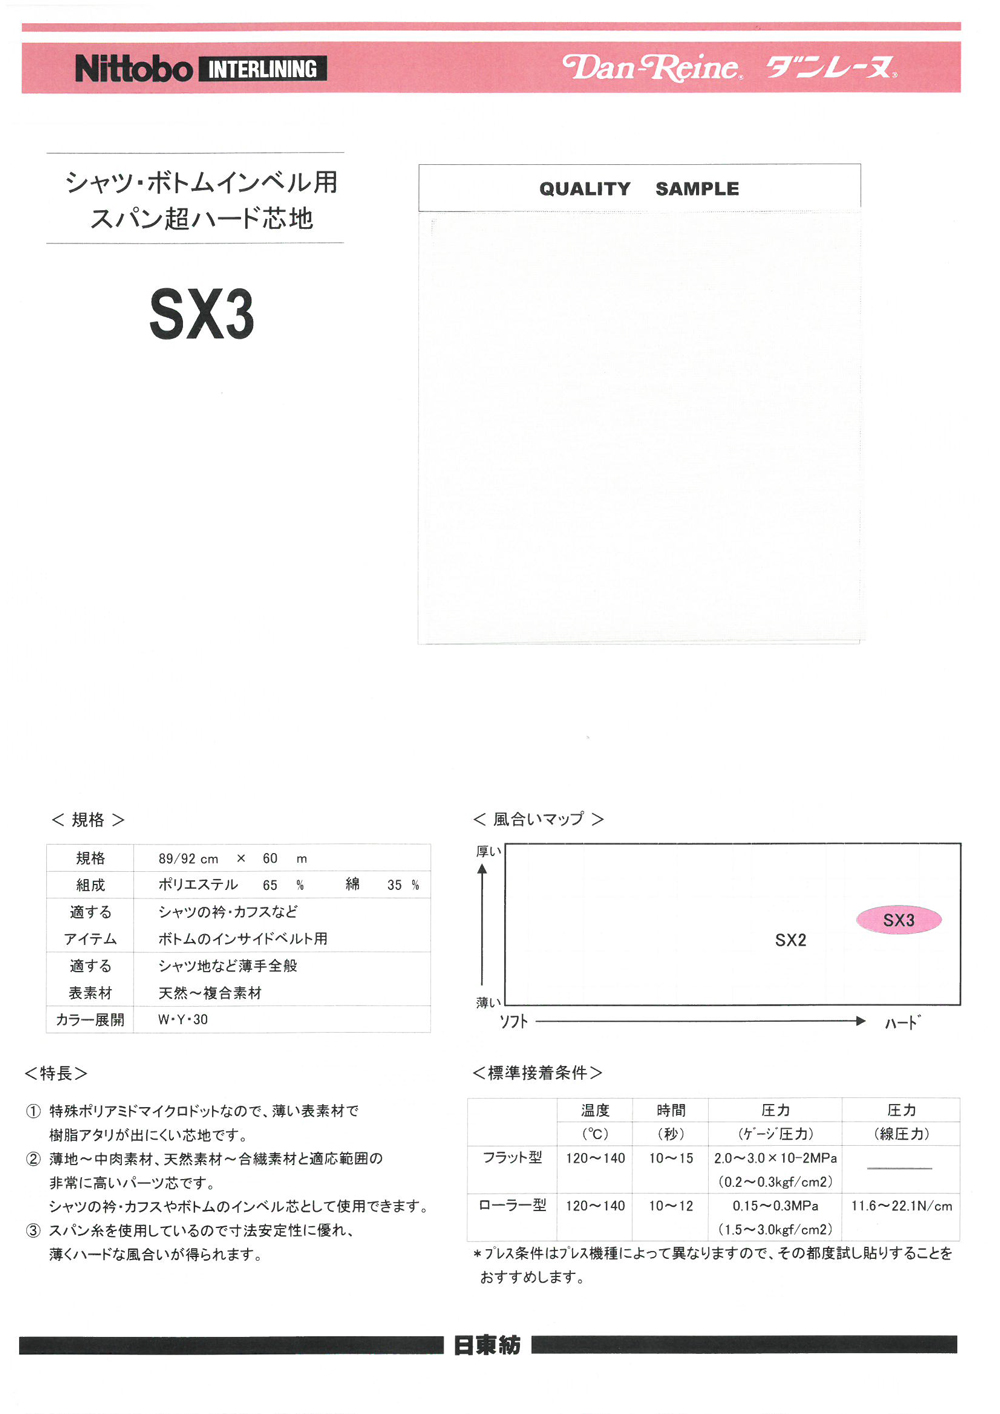 SX3 シャツ・ボトムインベル用 スパン超ハード芯地 日東紡インターライニング